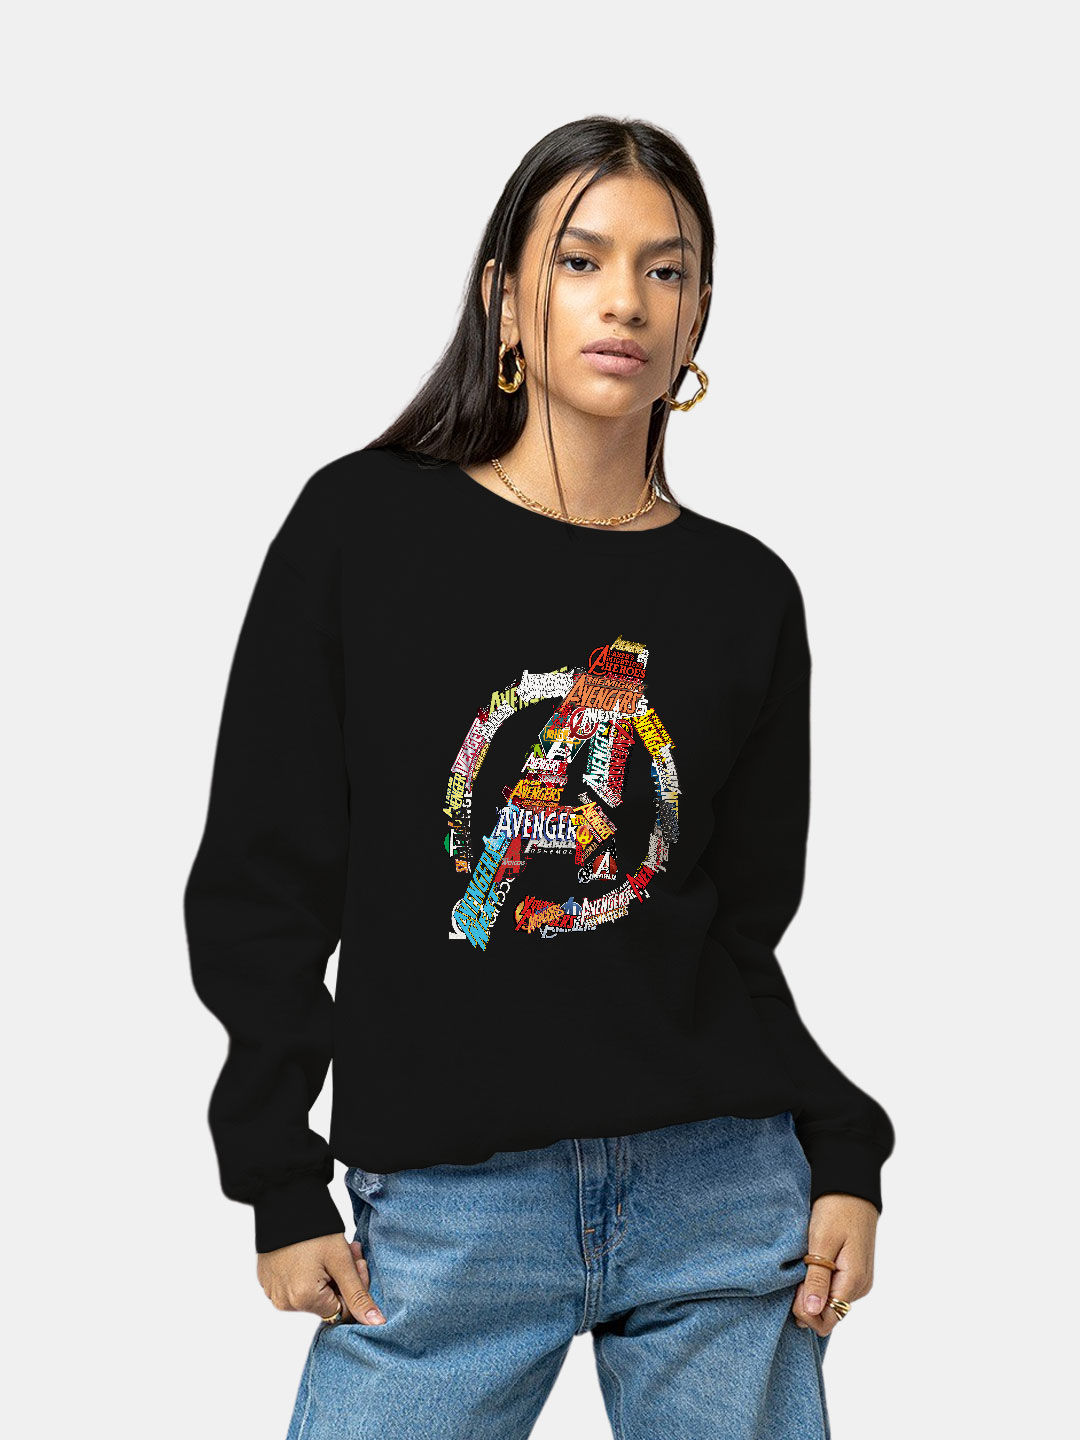 Buy Avengers Title - Female Designer Sweatshirt Sweatshirts Online